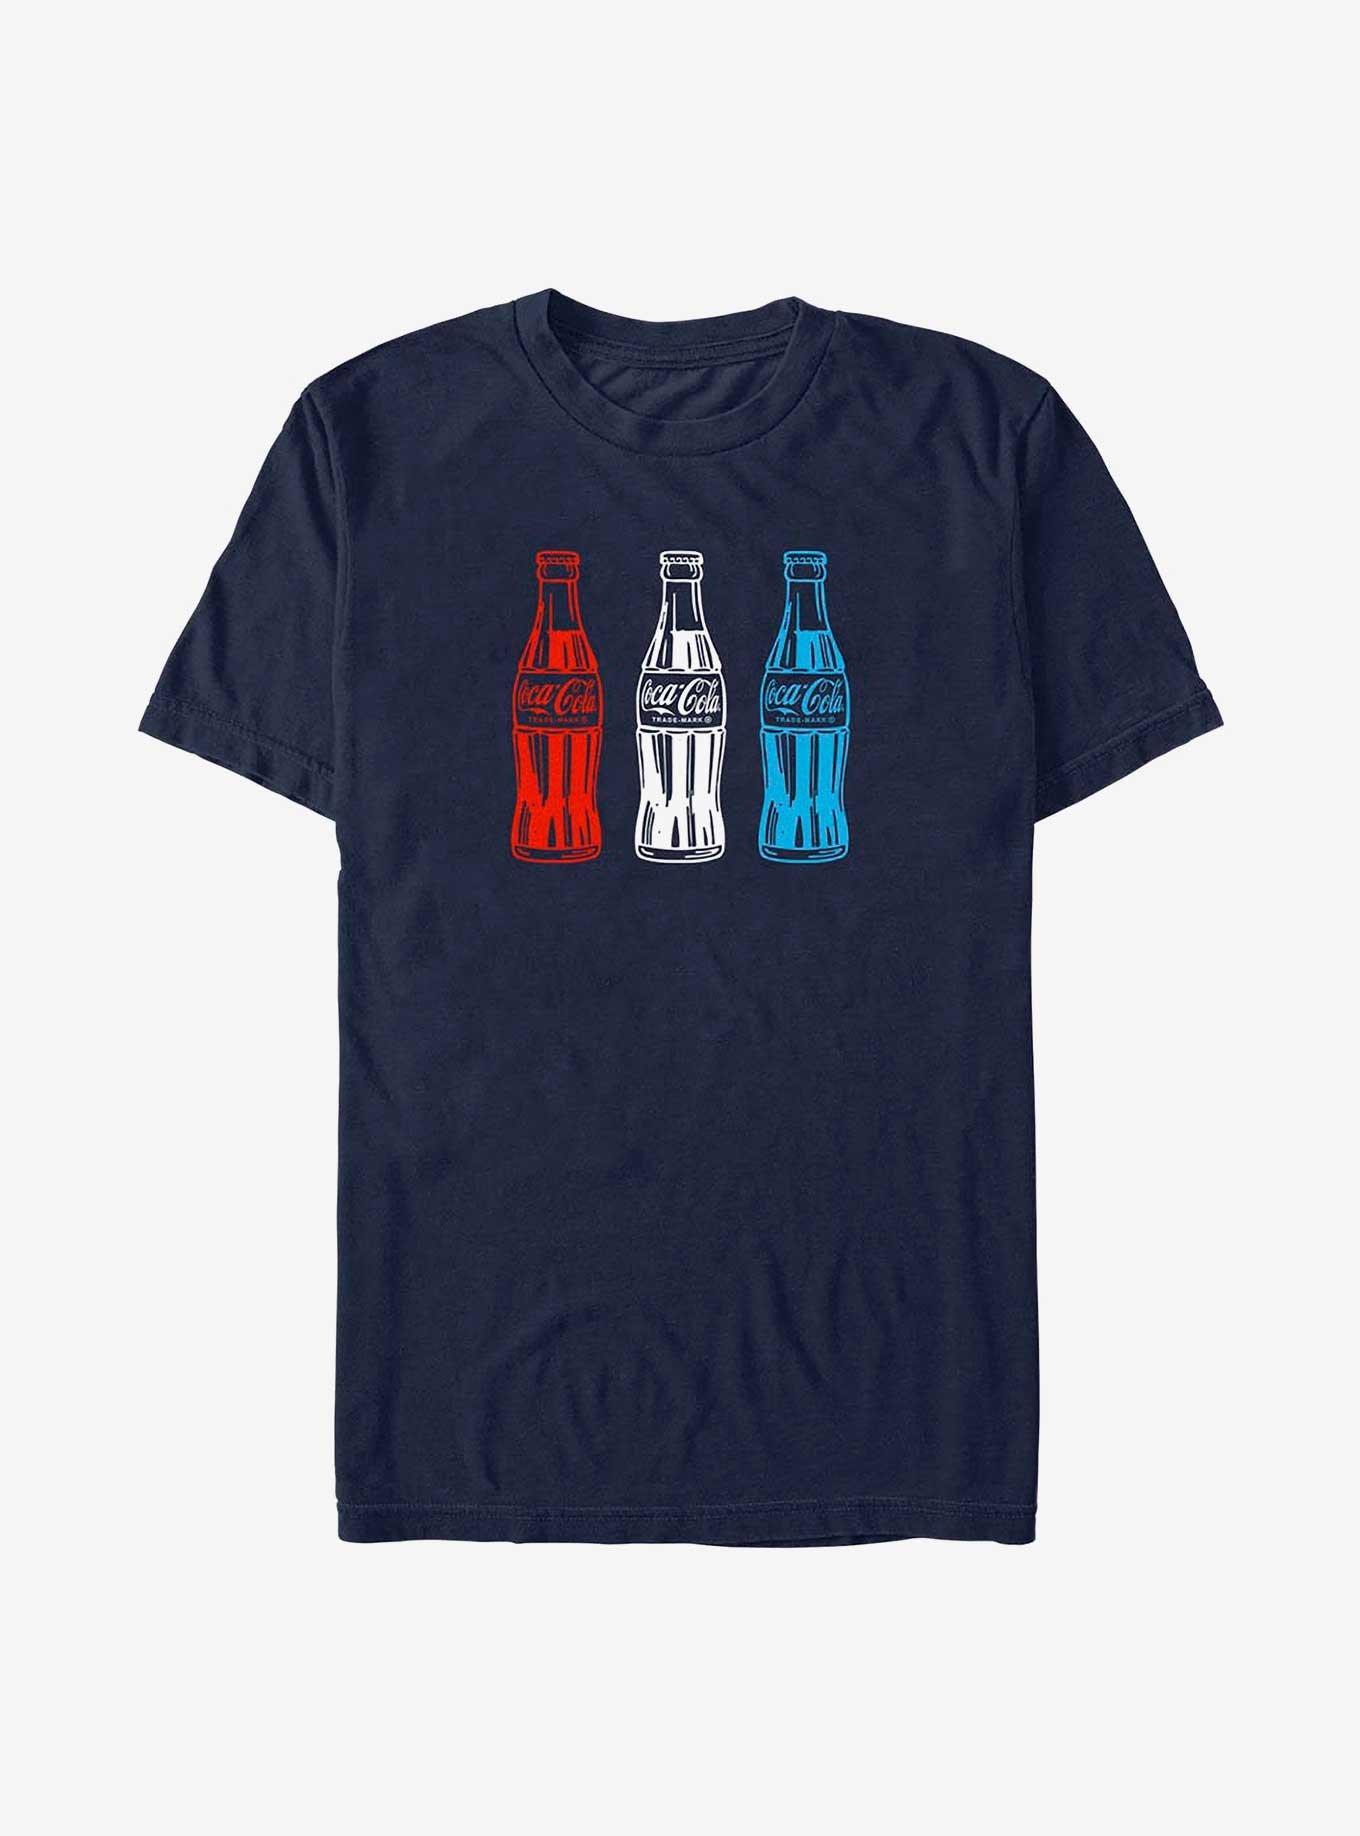 Coca-Cola Americana Bottles T-Shirt